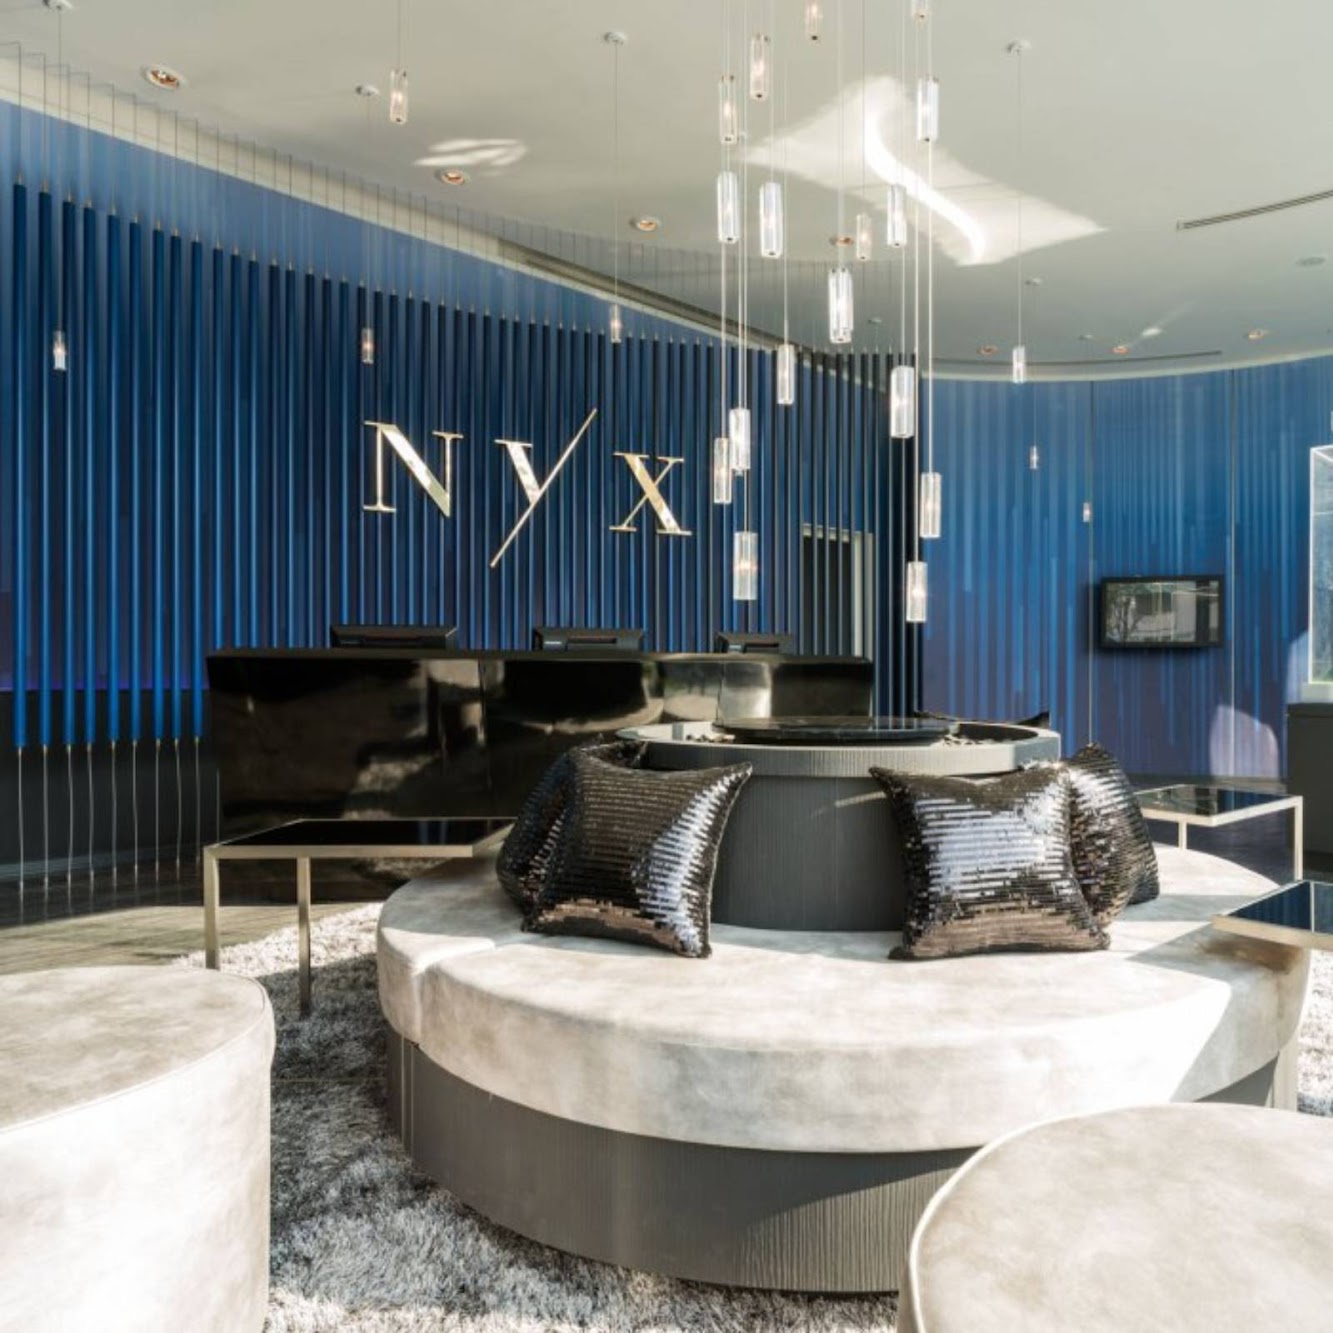 NYX Sales Gallery by TROP